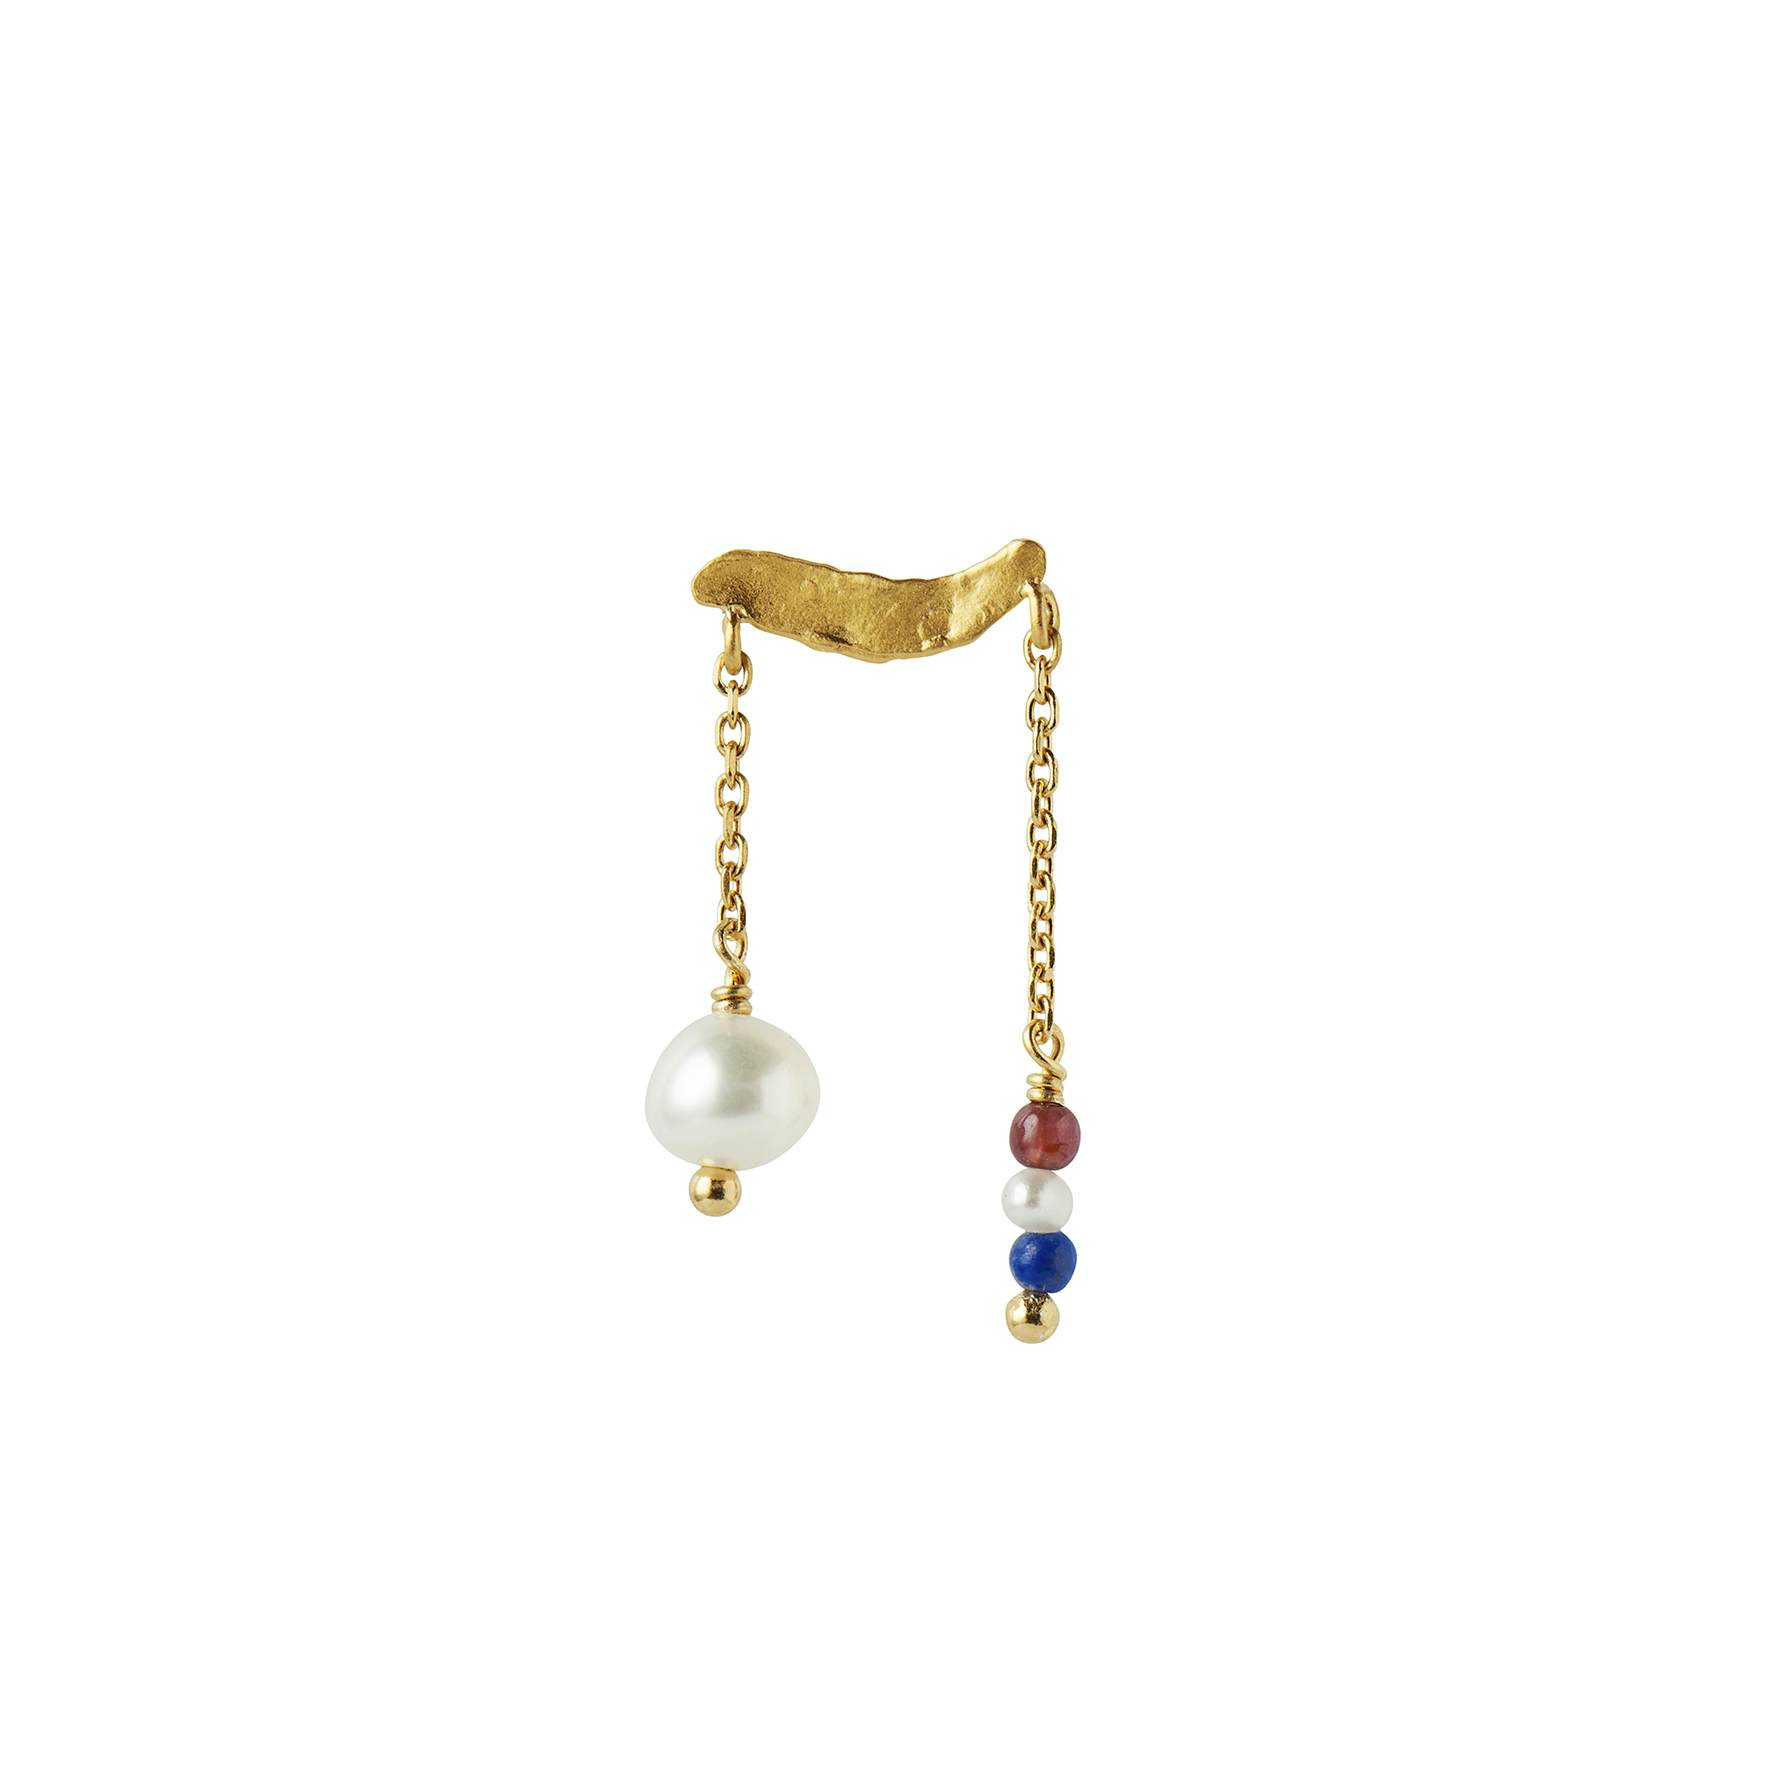 Petit Gold Splash Earring Chains & French Kiss fra STINE A Jewelry i Forgyldt-Sølv Sterling 925